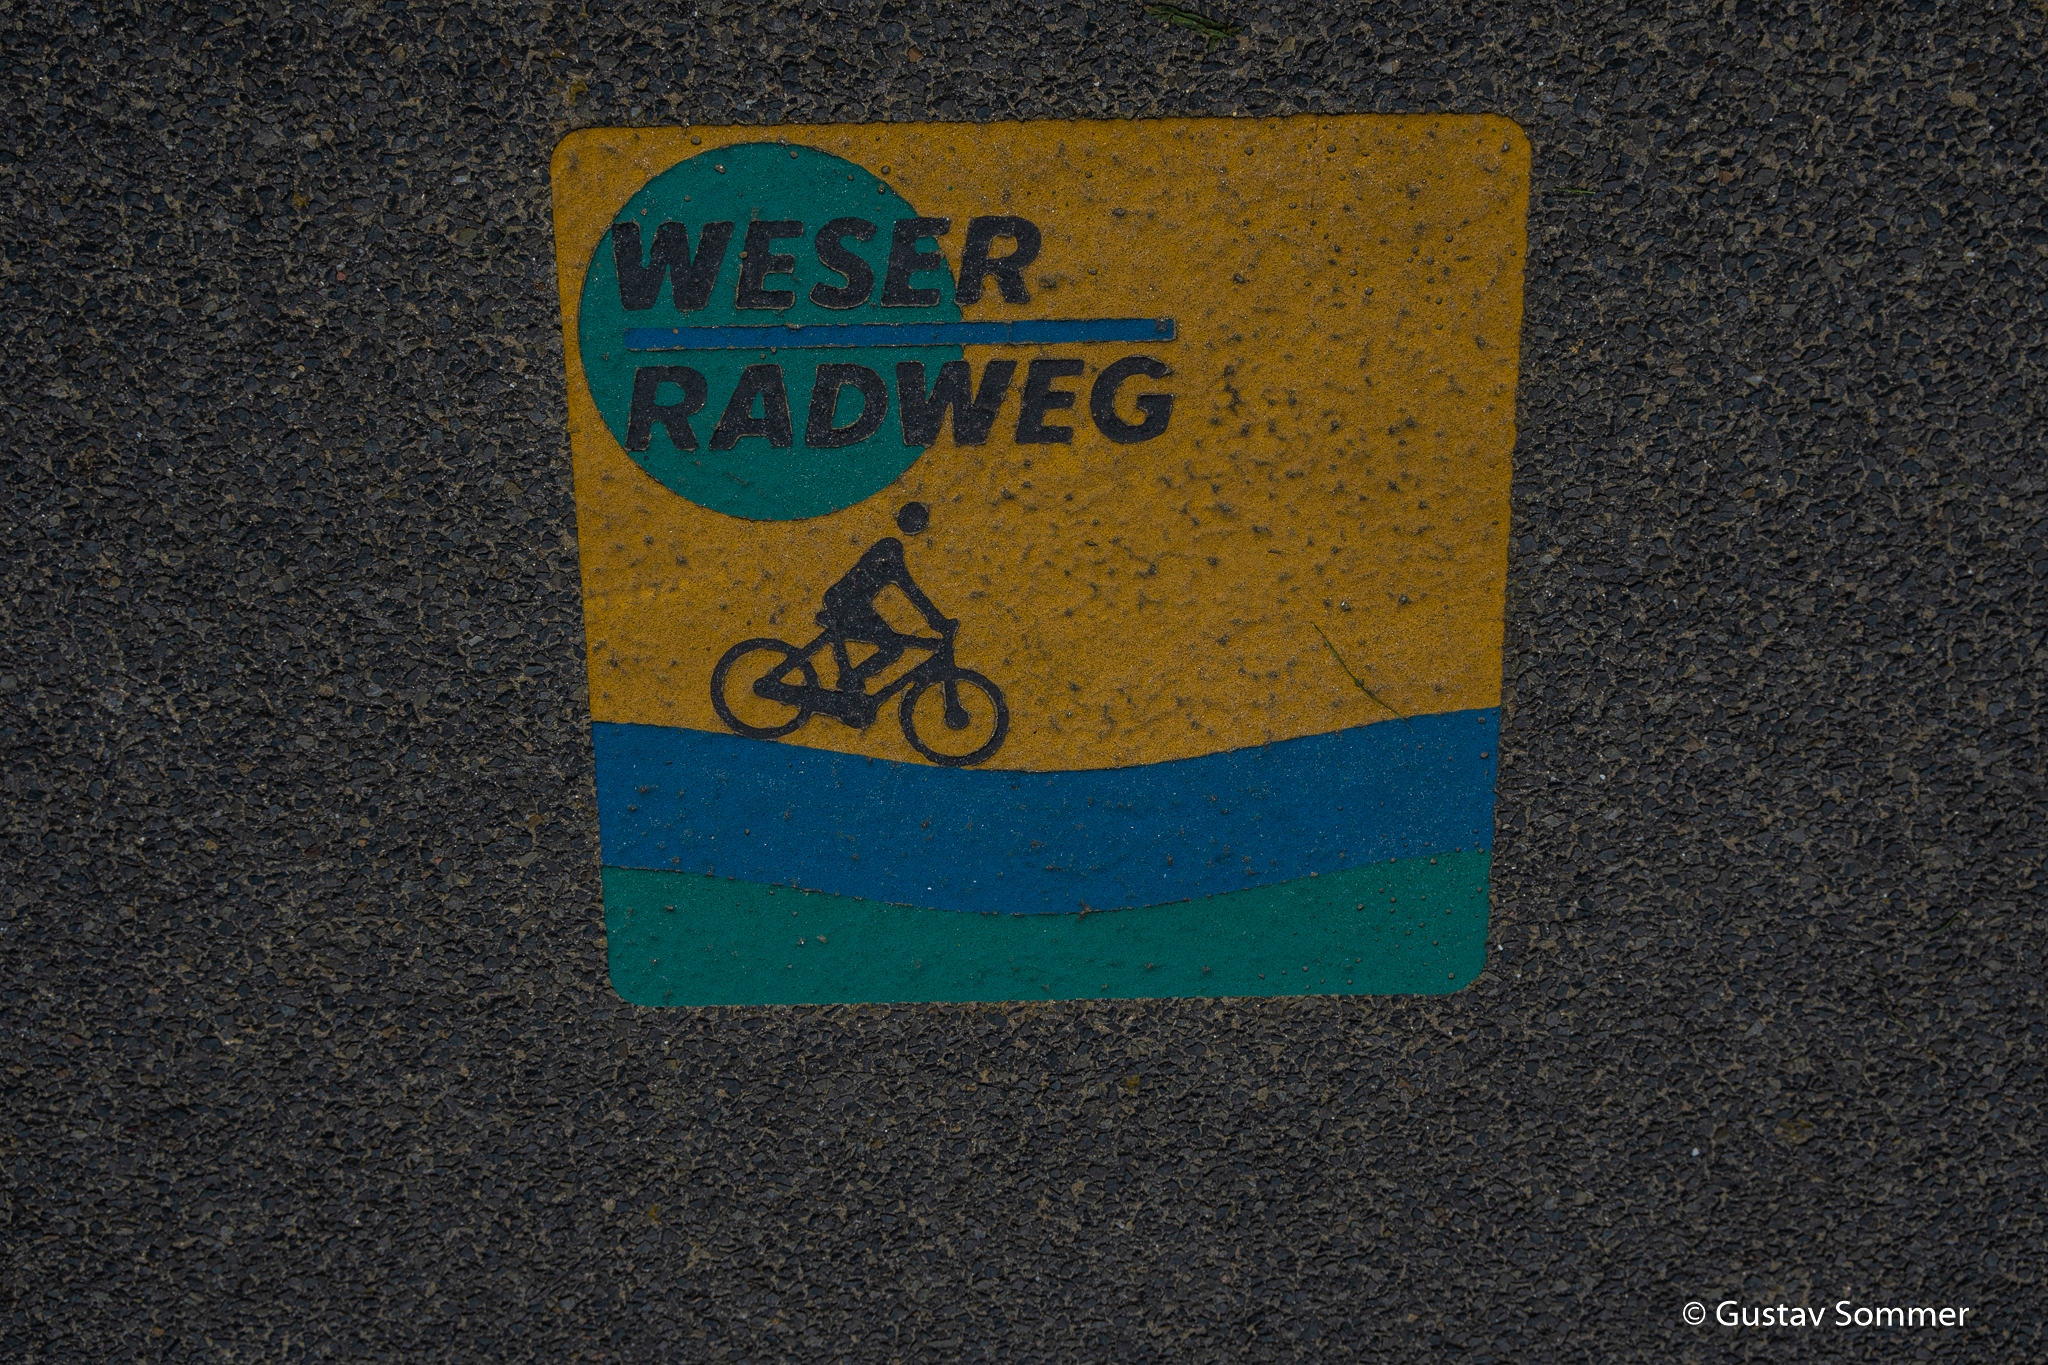 Weser Radweg Cuxhaven